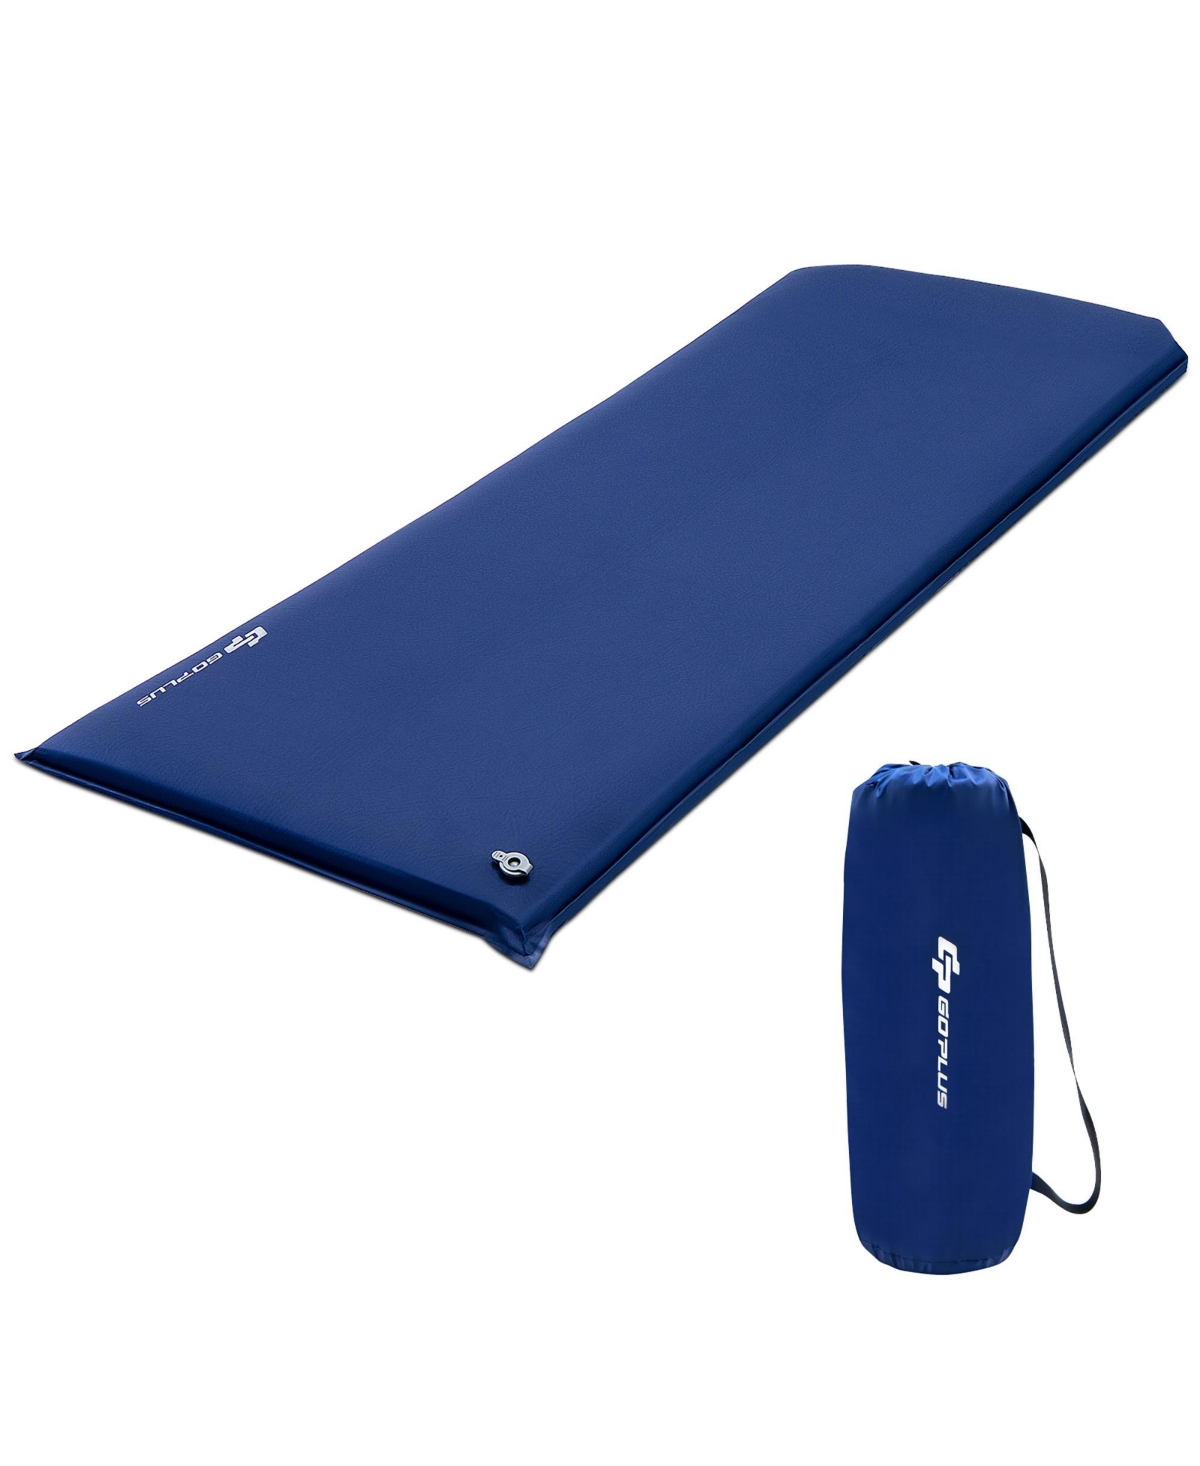 Portable & Lightweight Folding Foam Sleeping Cot for Camping - Blue